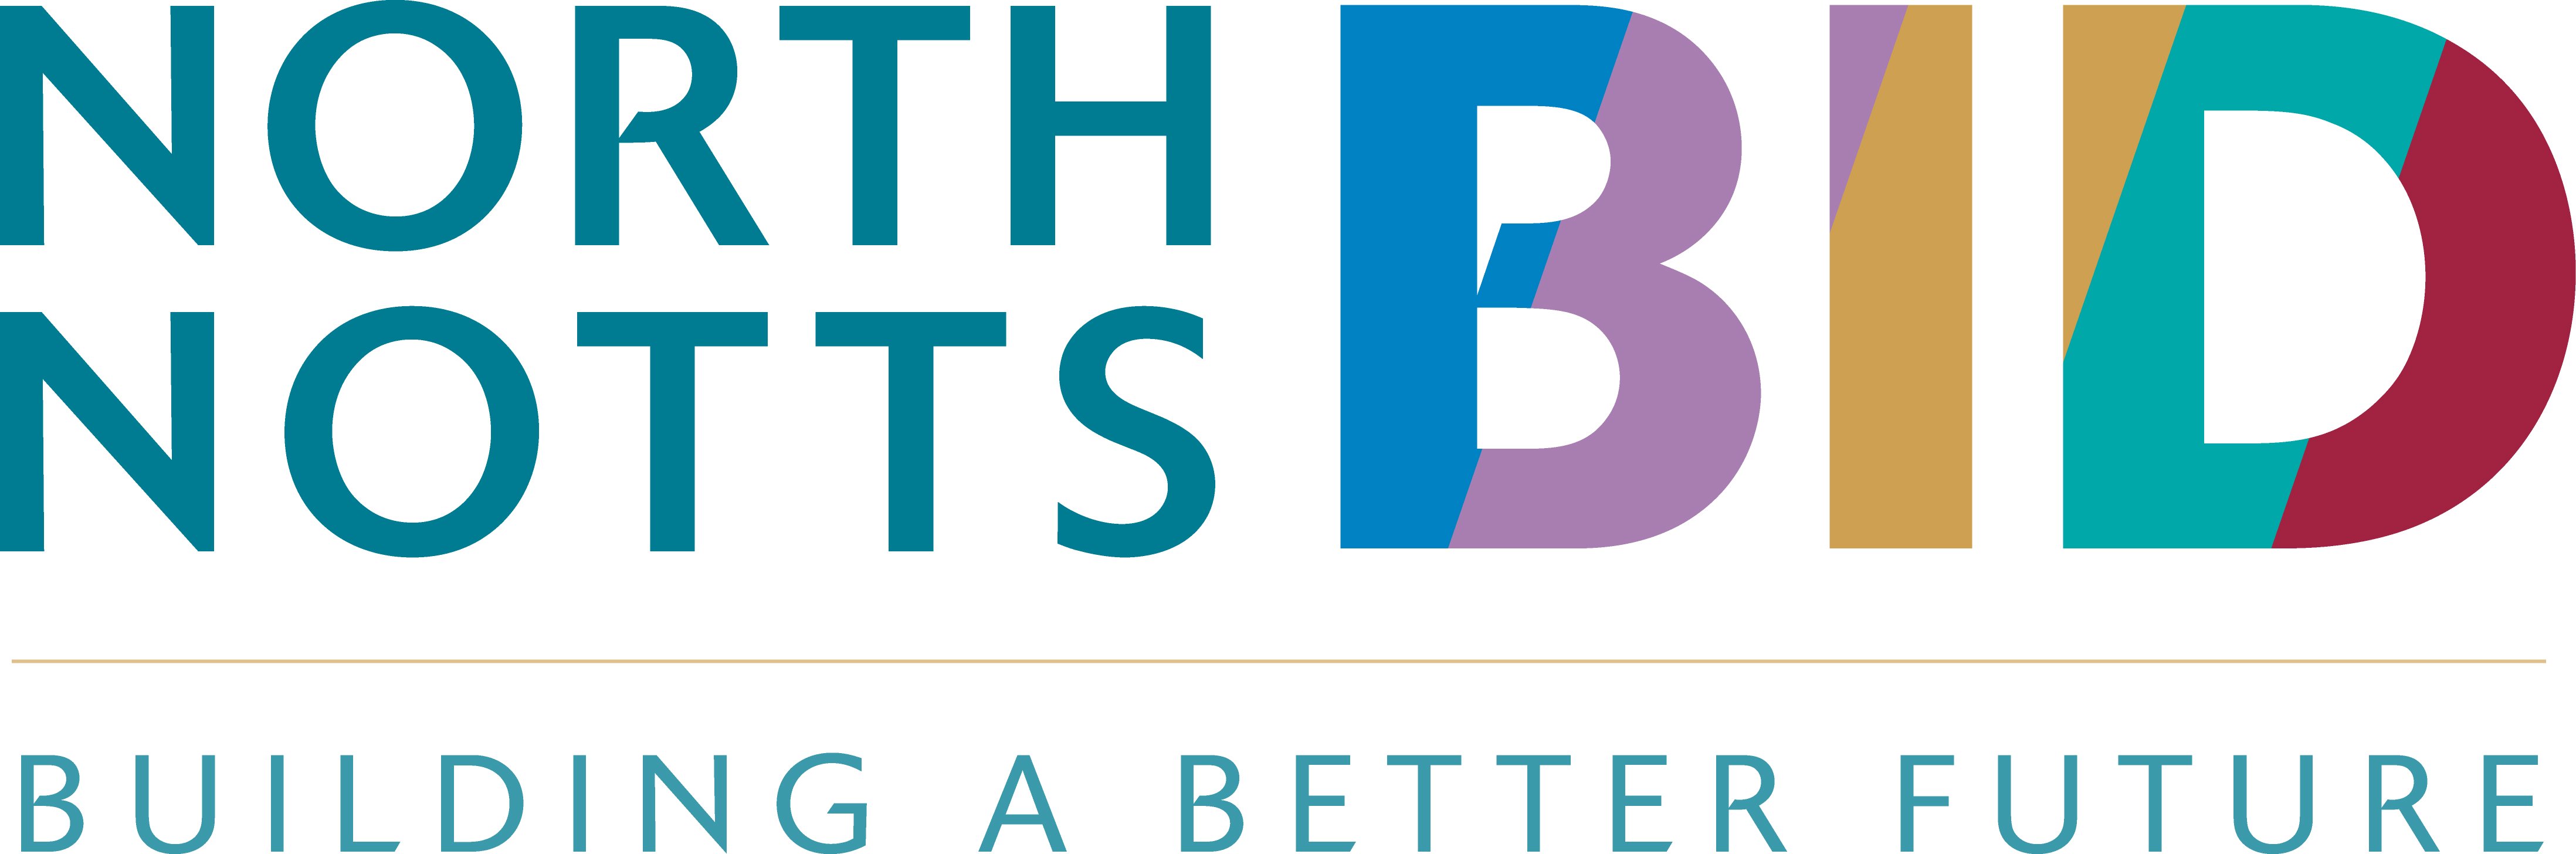 North Notts BID logo